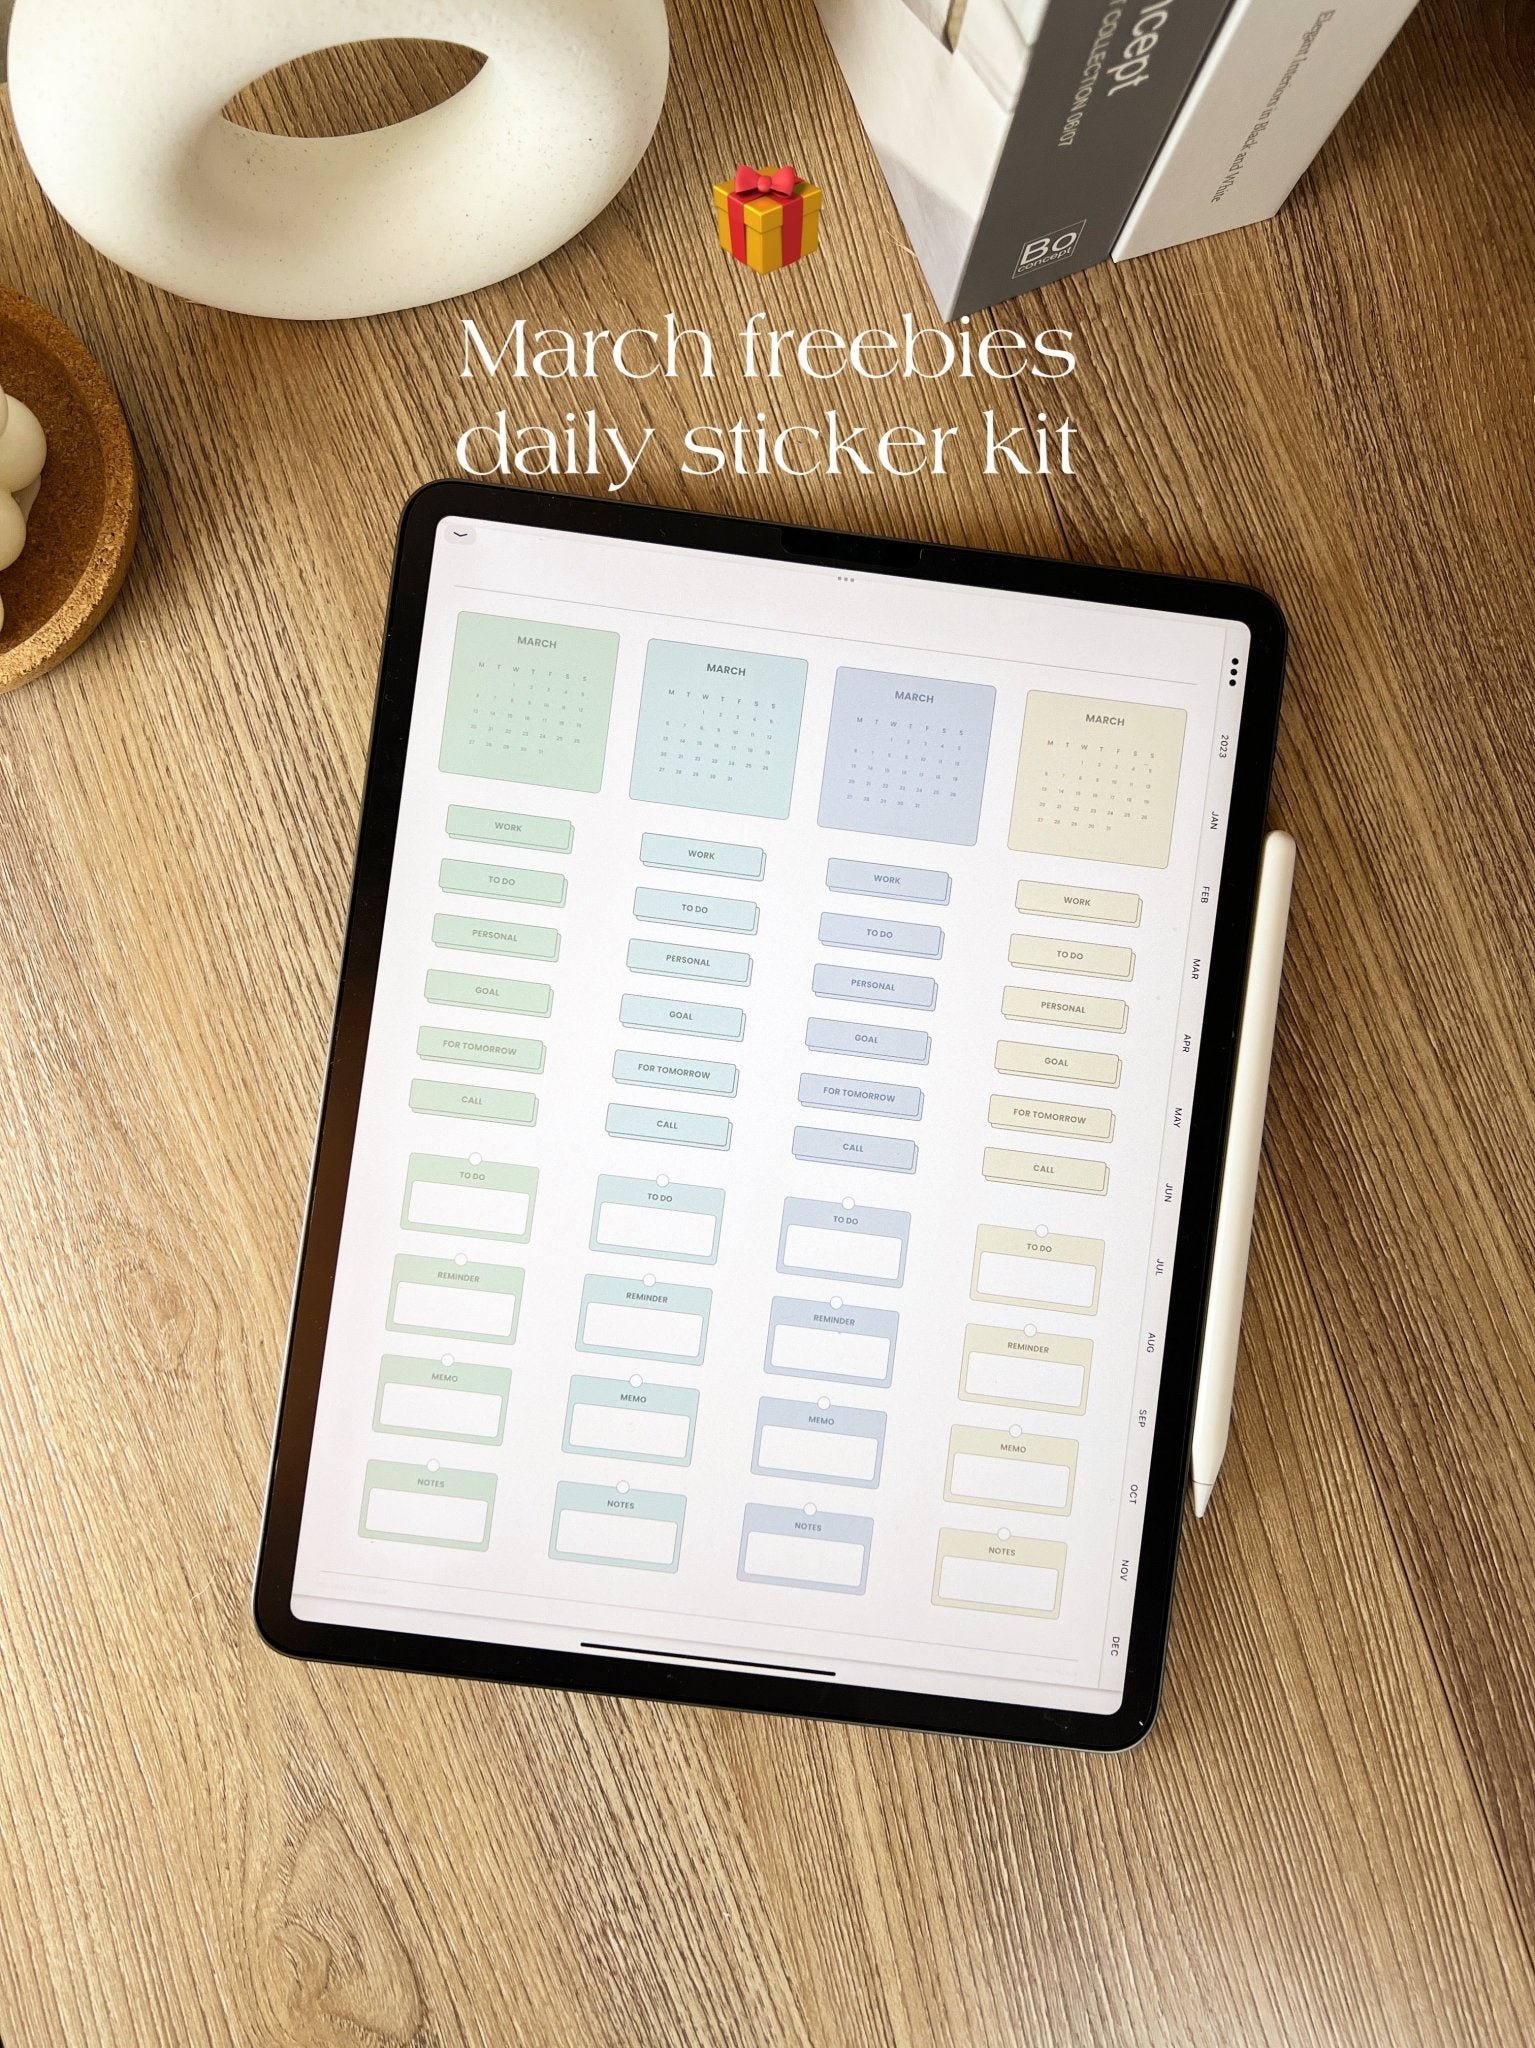 March freebies - digital daily sticker kit - IvoryDigitalHub - Digital Planners | Digital Notebooks | Digital Stickers | Digital Templates